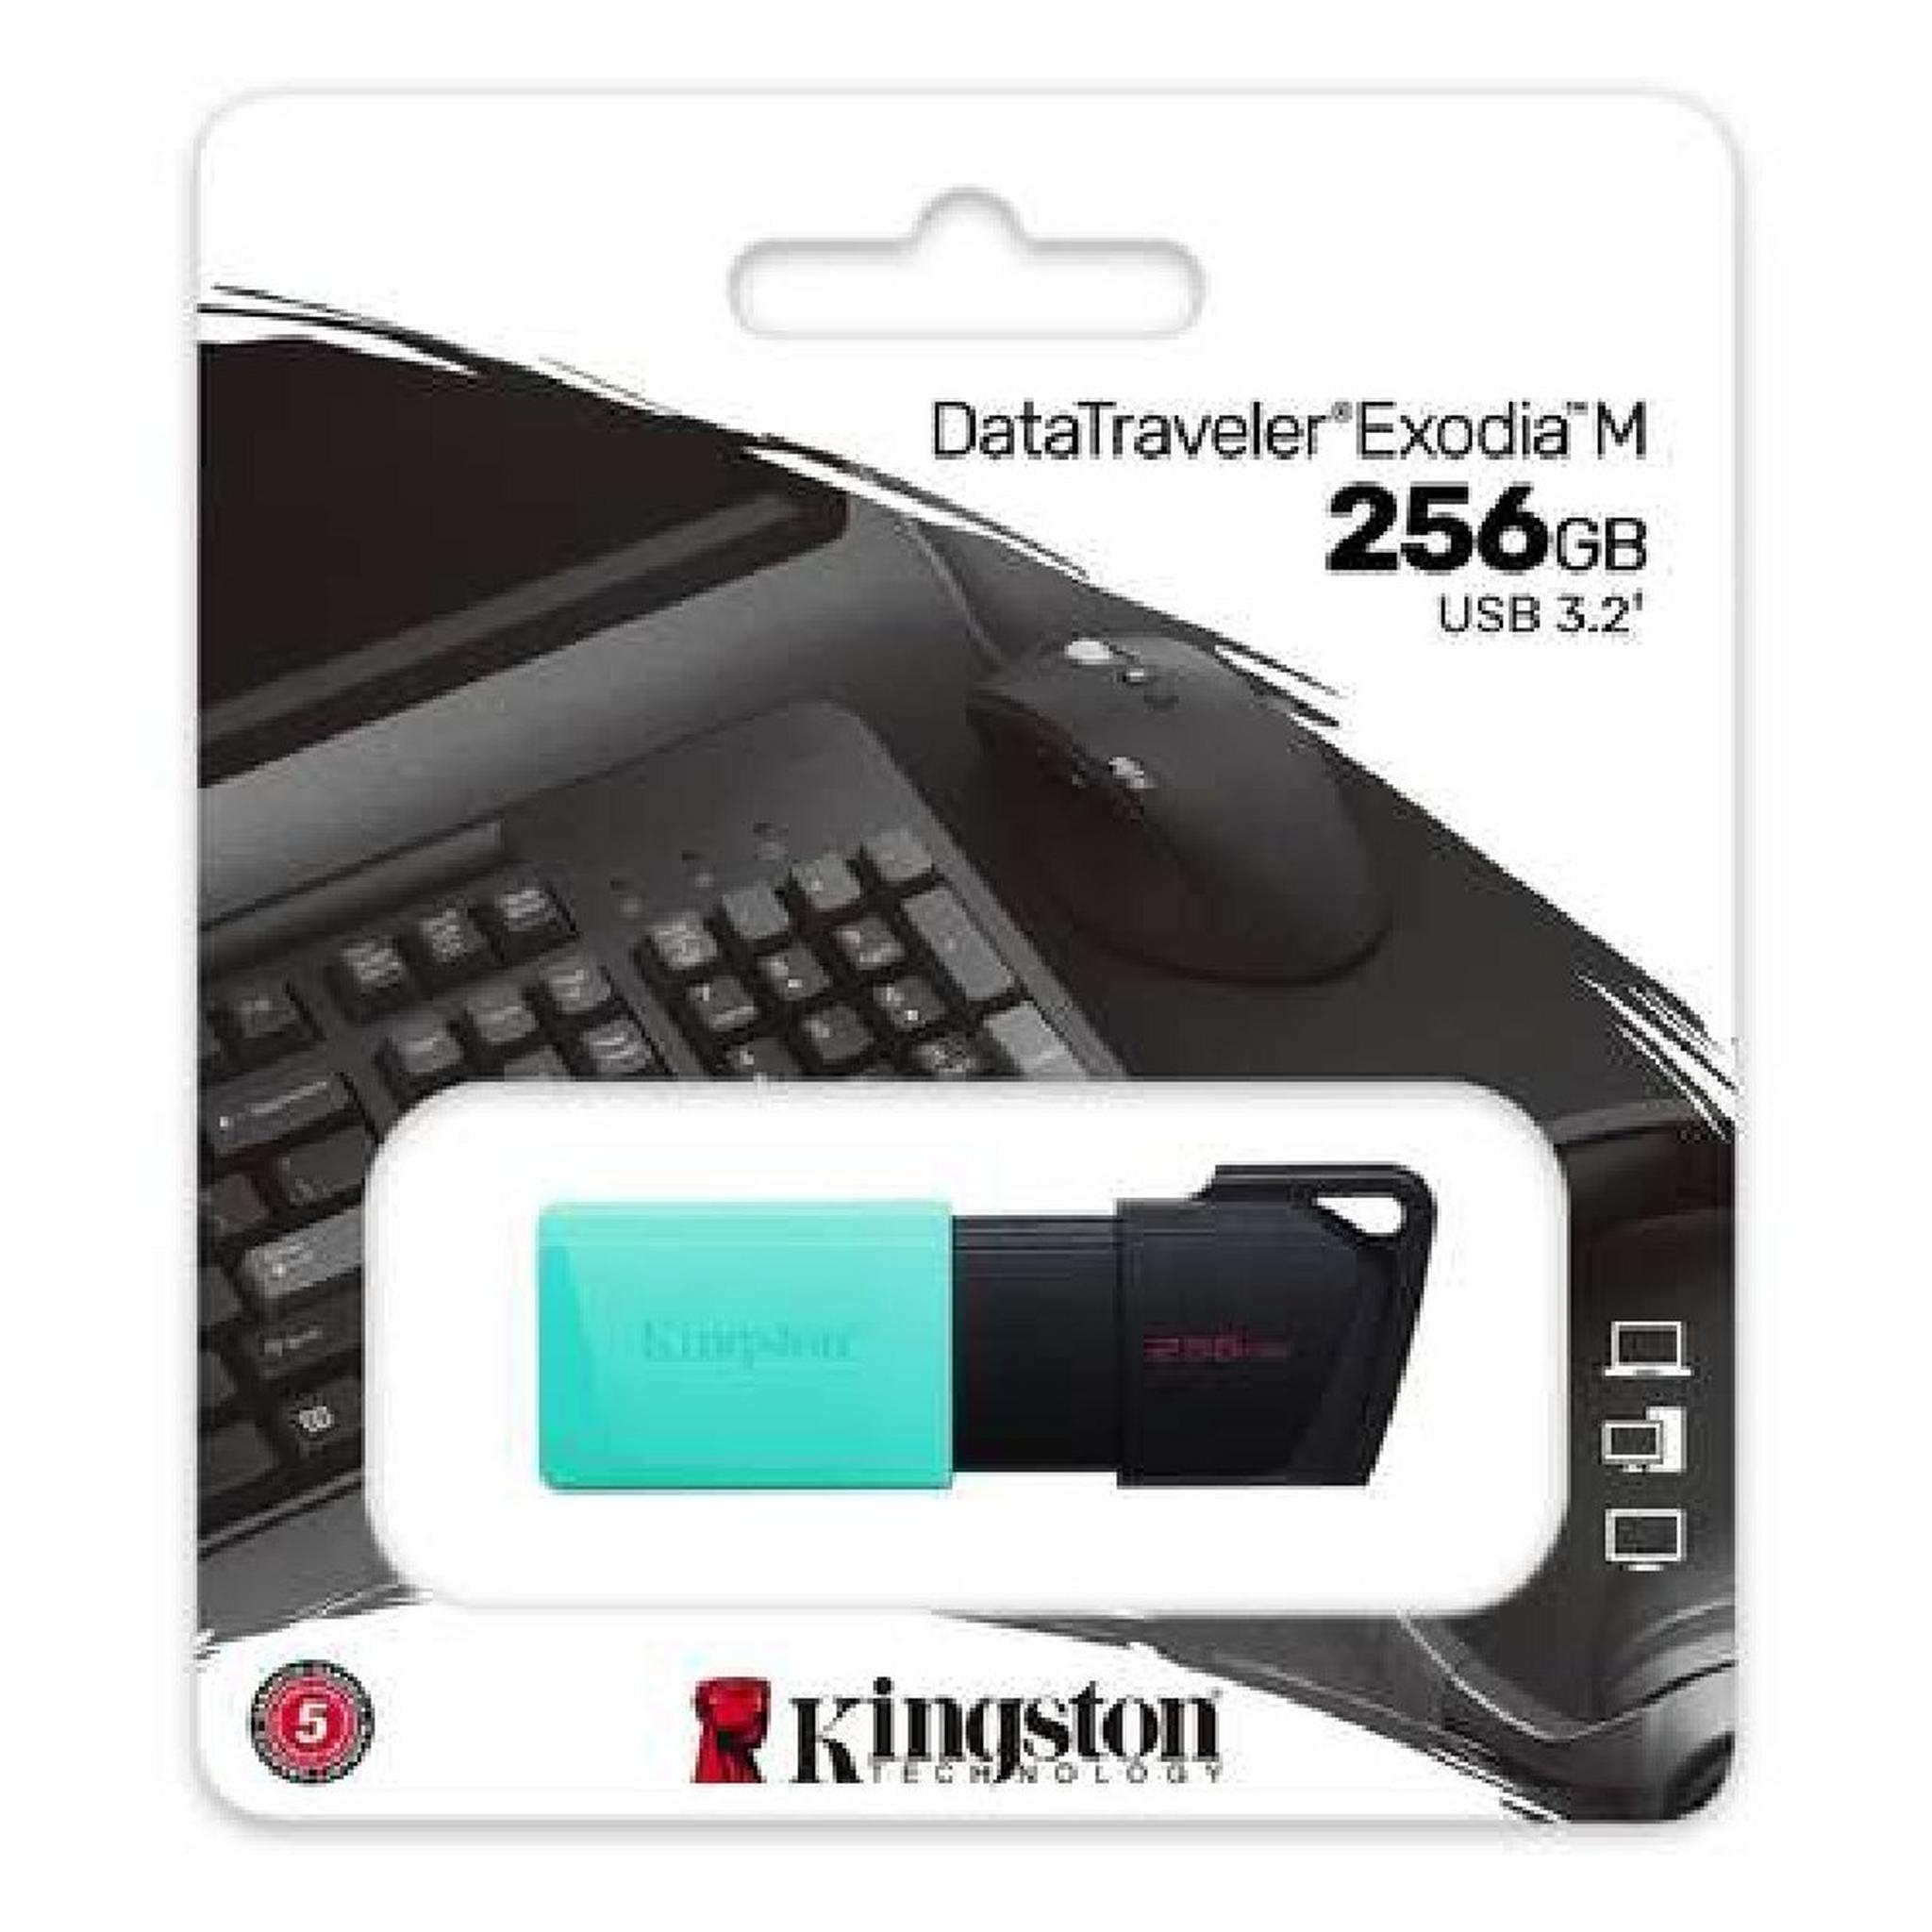 Kingston Data Traveler Exodia M USB flash drive - 256GB - Black/Teal